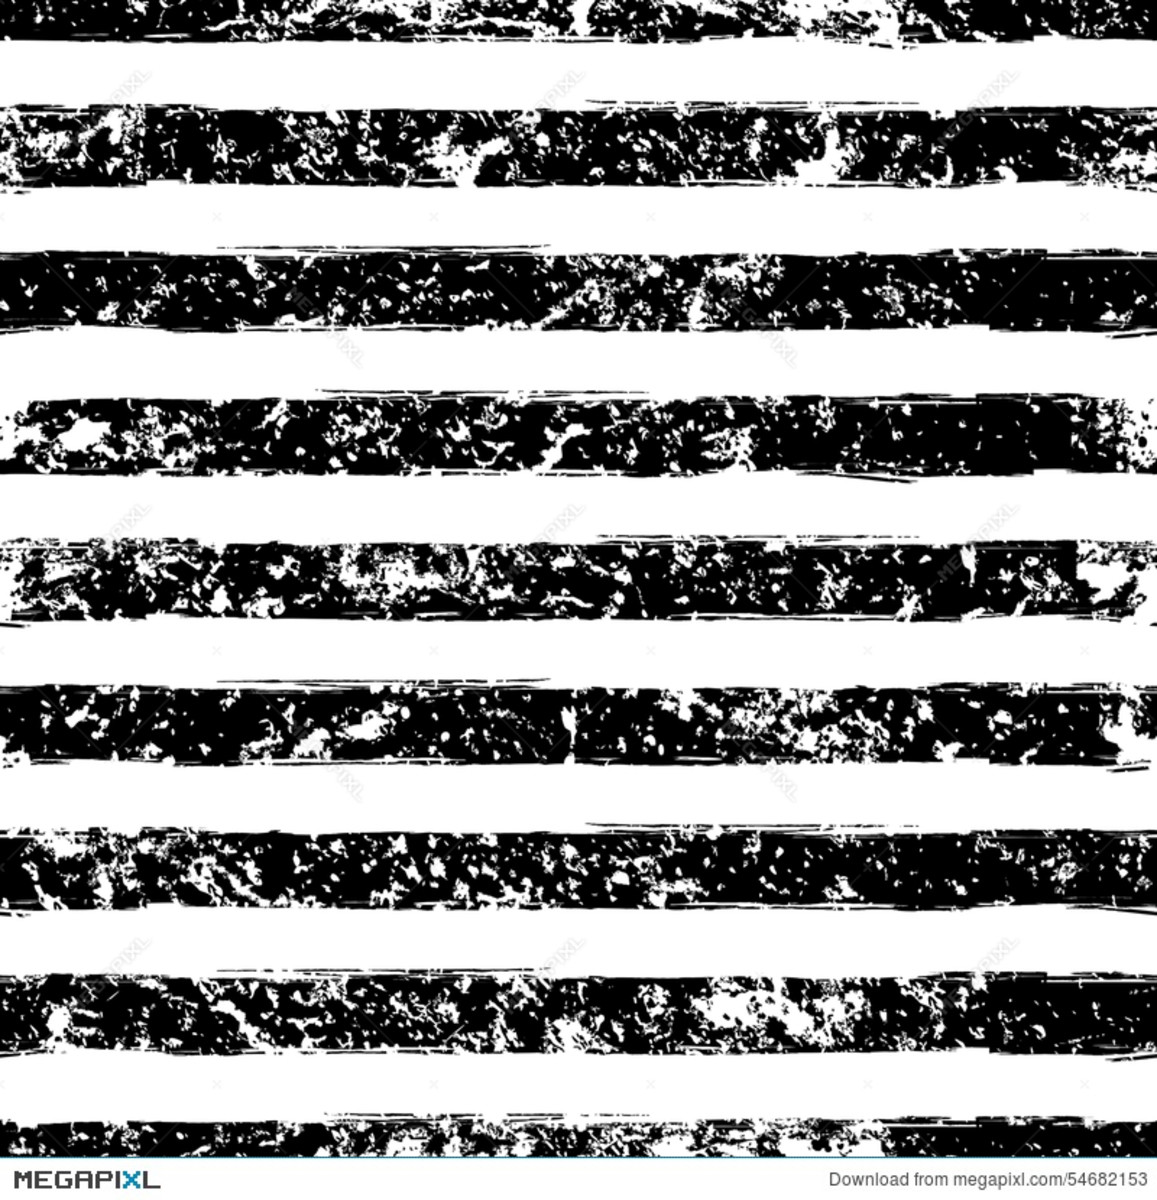 A monochromatic striped statement